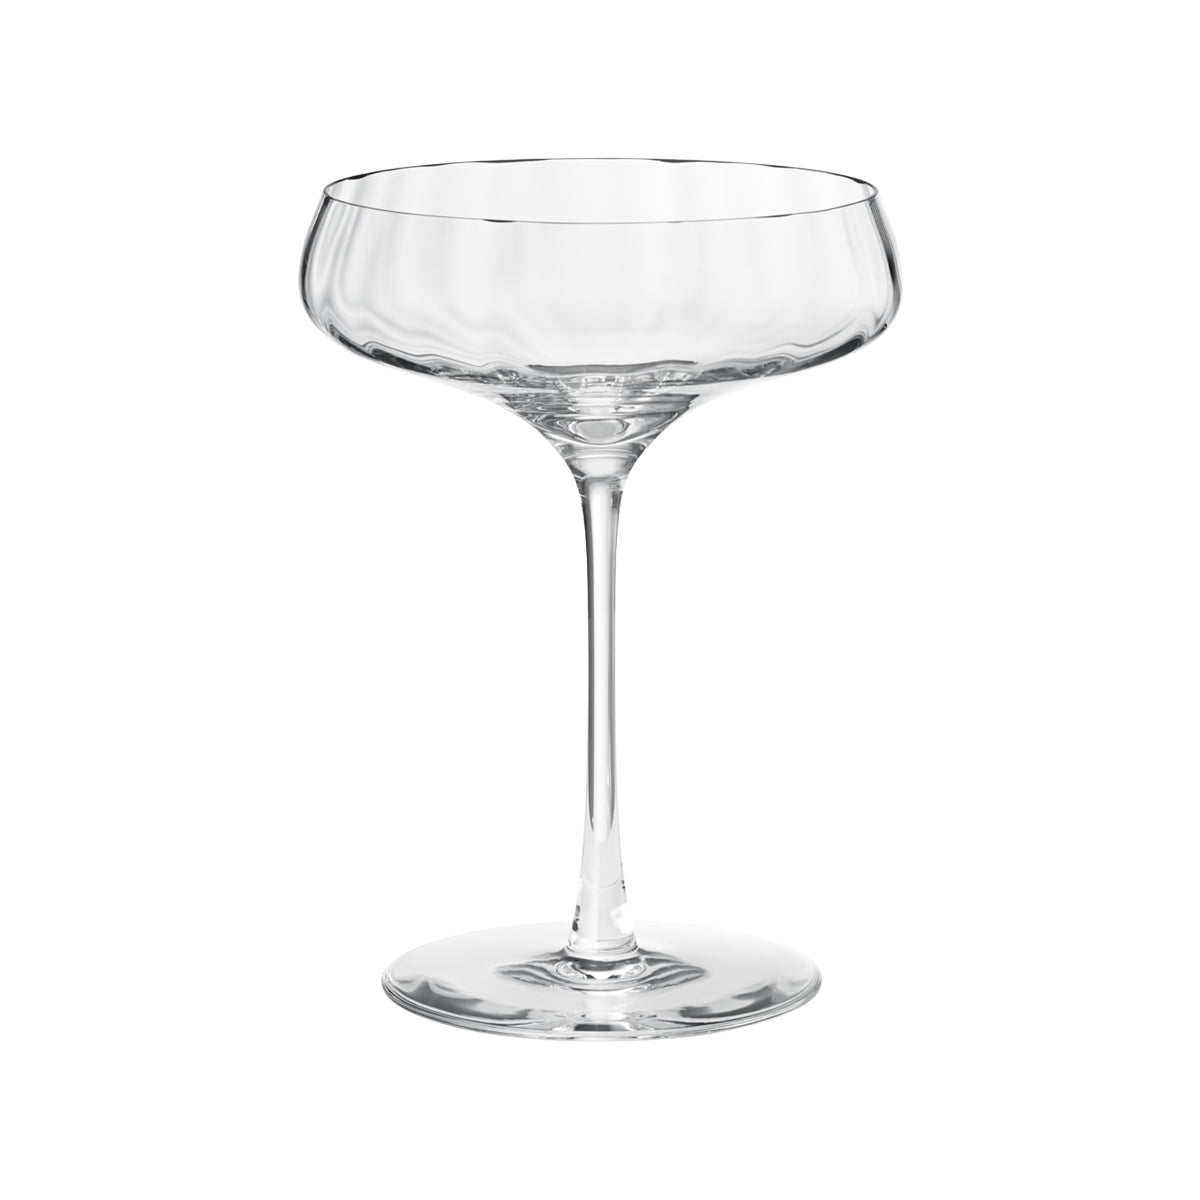 Georg Jensen Bernadotte Cocktail Coupe Glasses - Set of 2